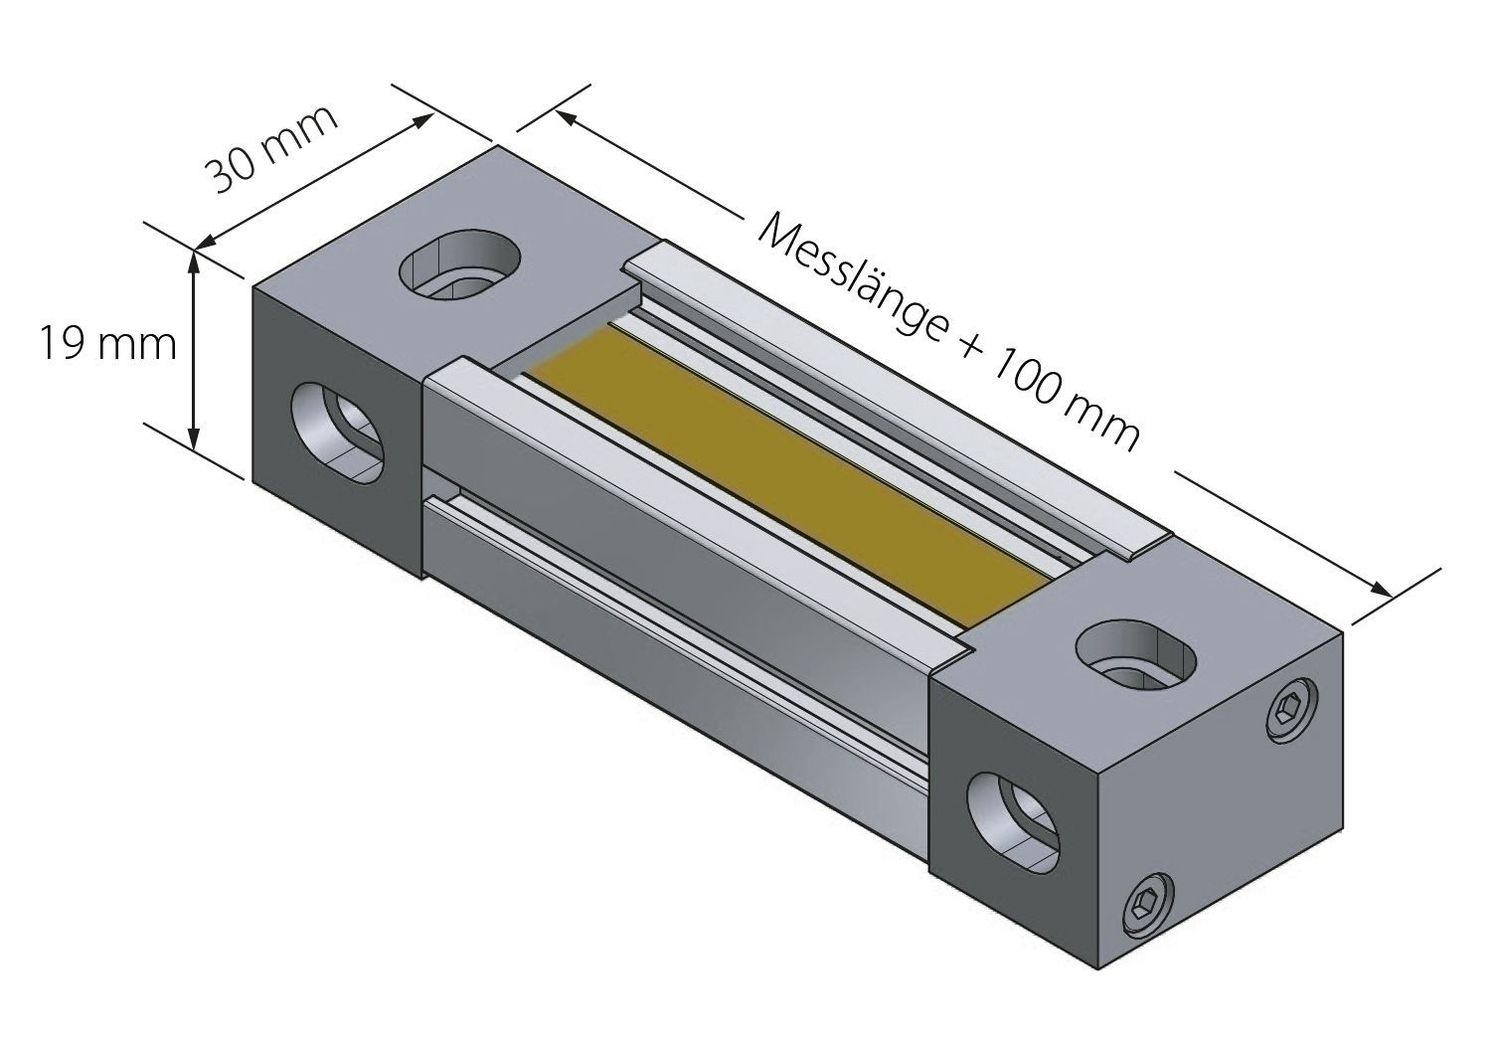 K+C Magnetmaßstab MS10A 1100 mm - 5 µm | Verfahrweg 1120 mm